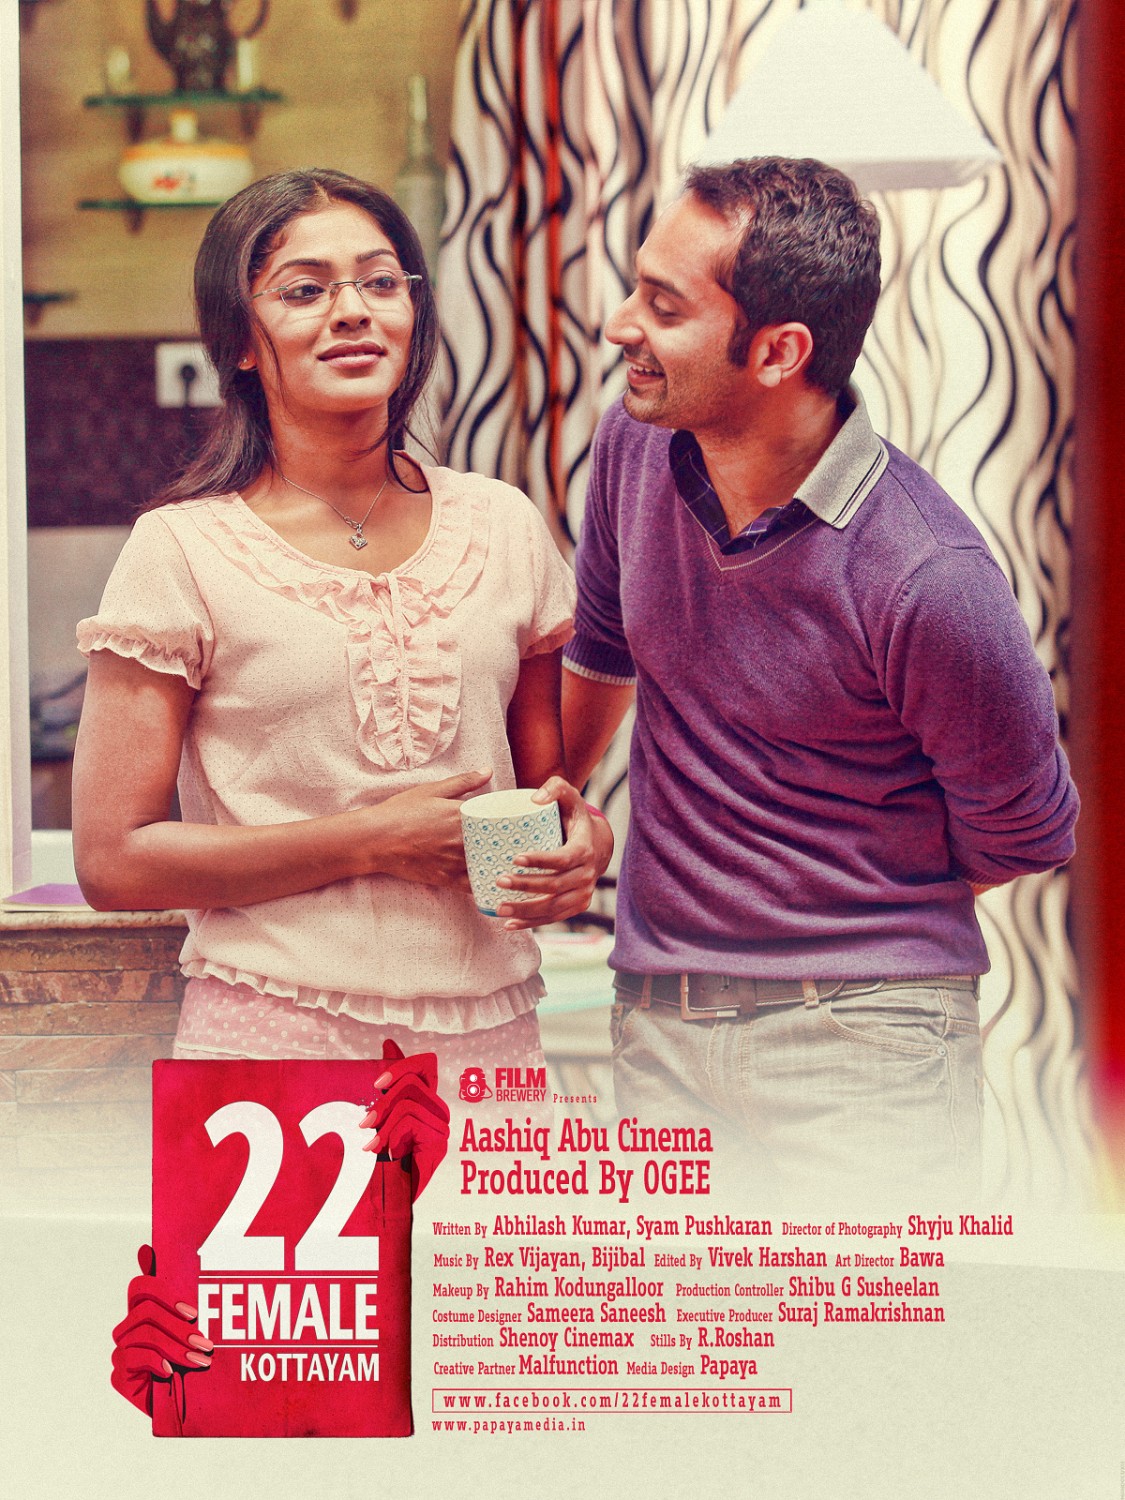 Extra Large Movie Poster Image for 22 Female Kottayam (#6 of 28)